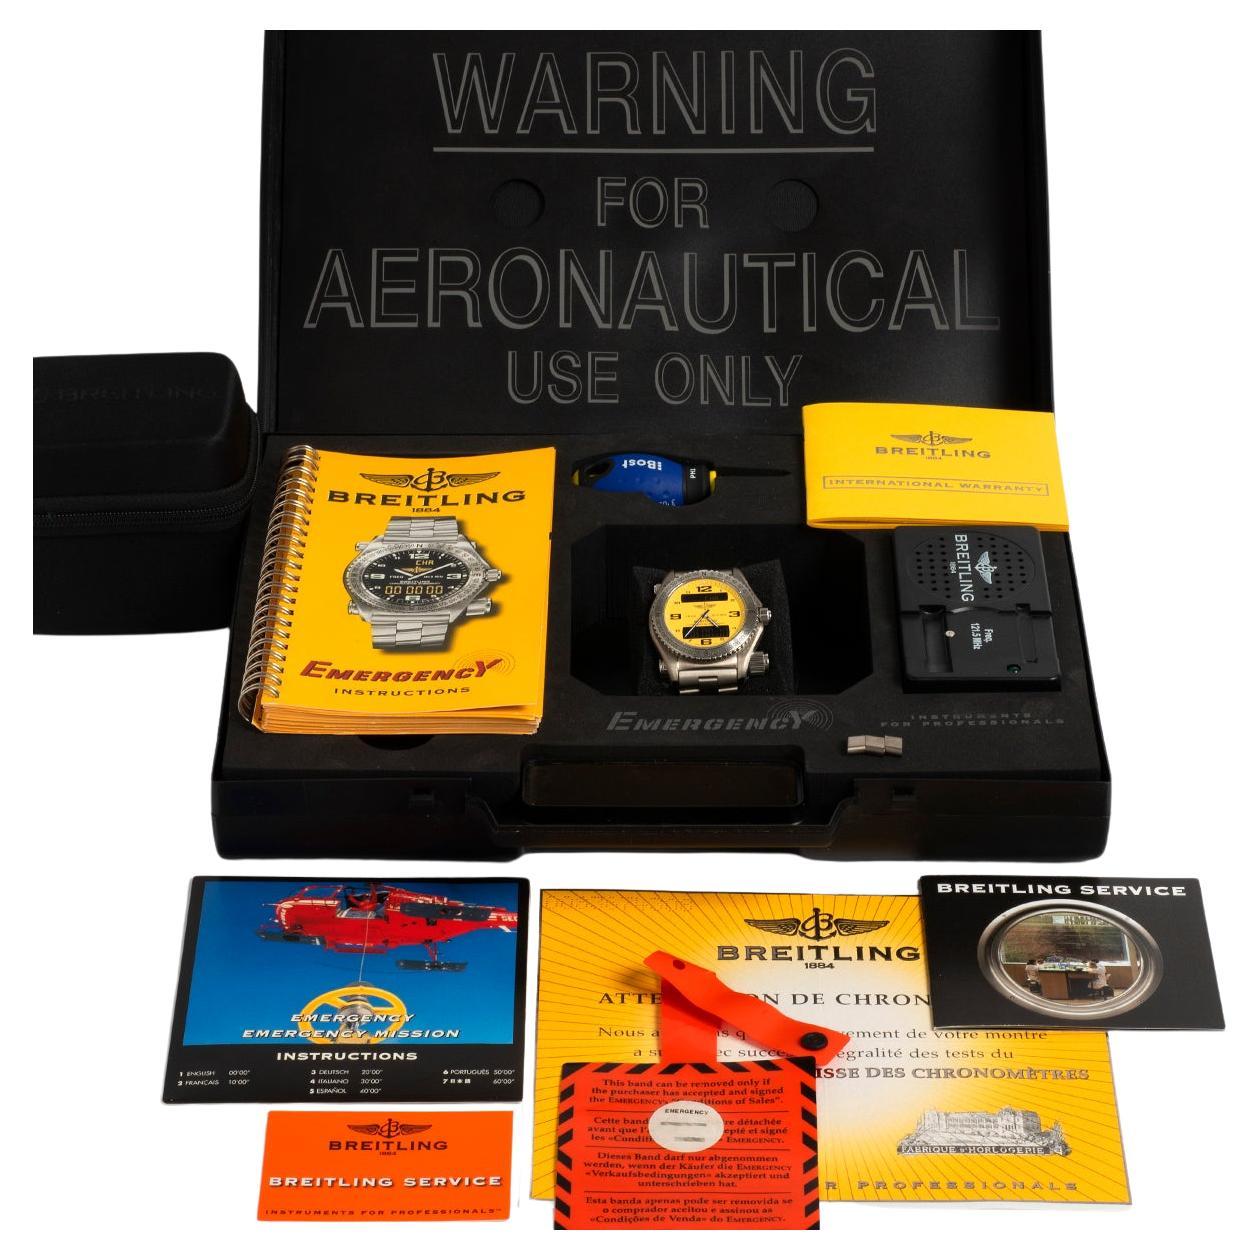 Can anyone buy a Breitling Emergency watch?